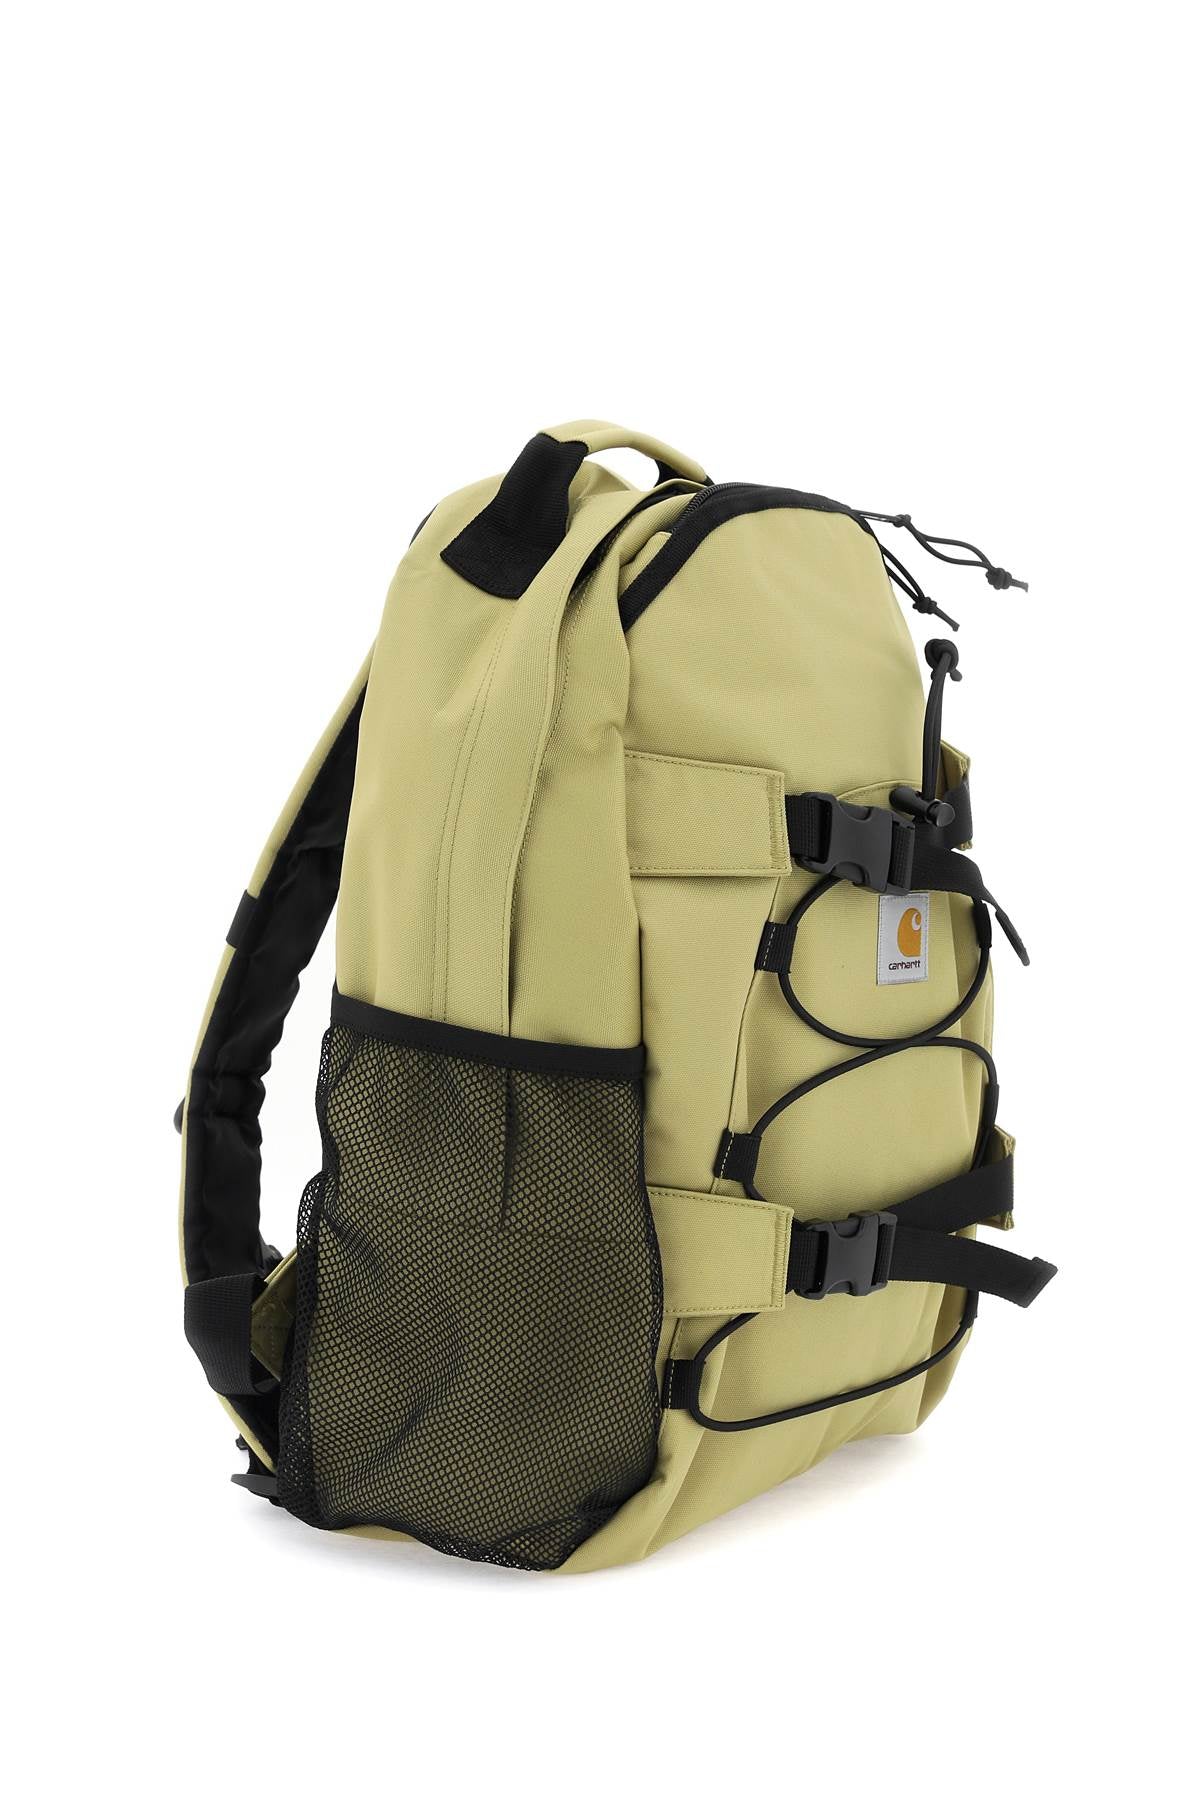 Carhartt wip kickflip backpack in recycled fabric-2